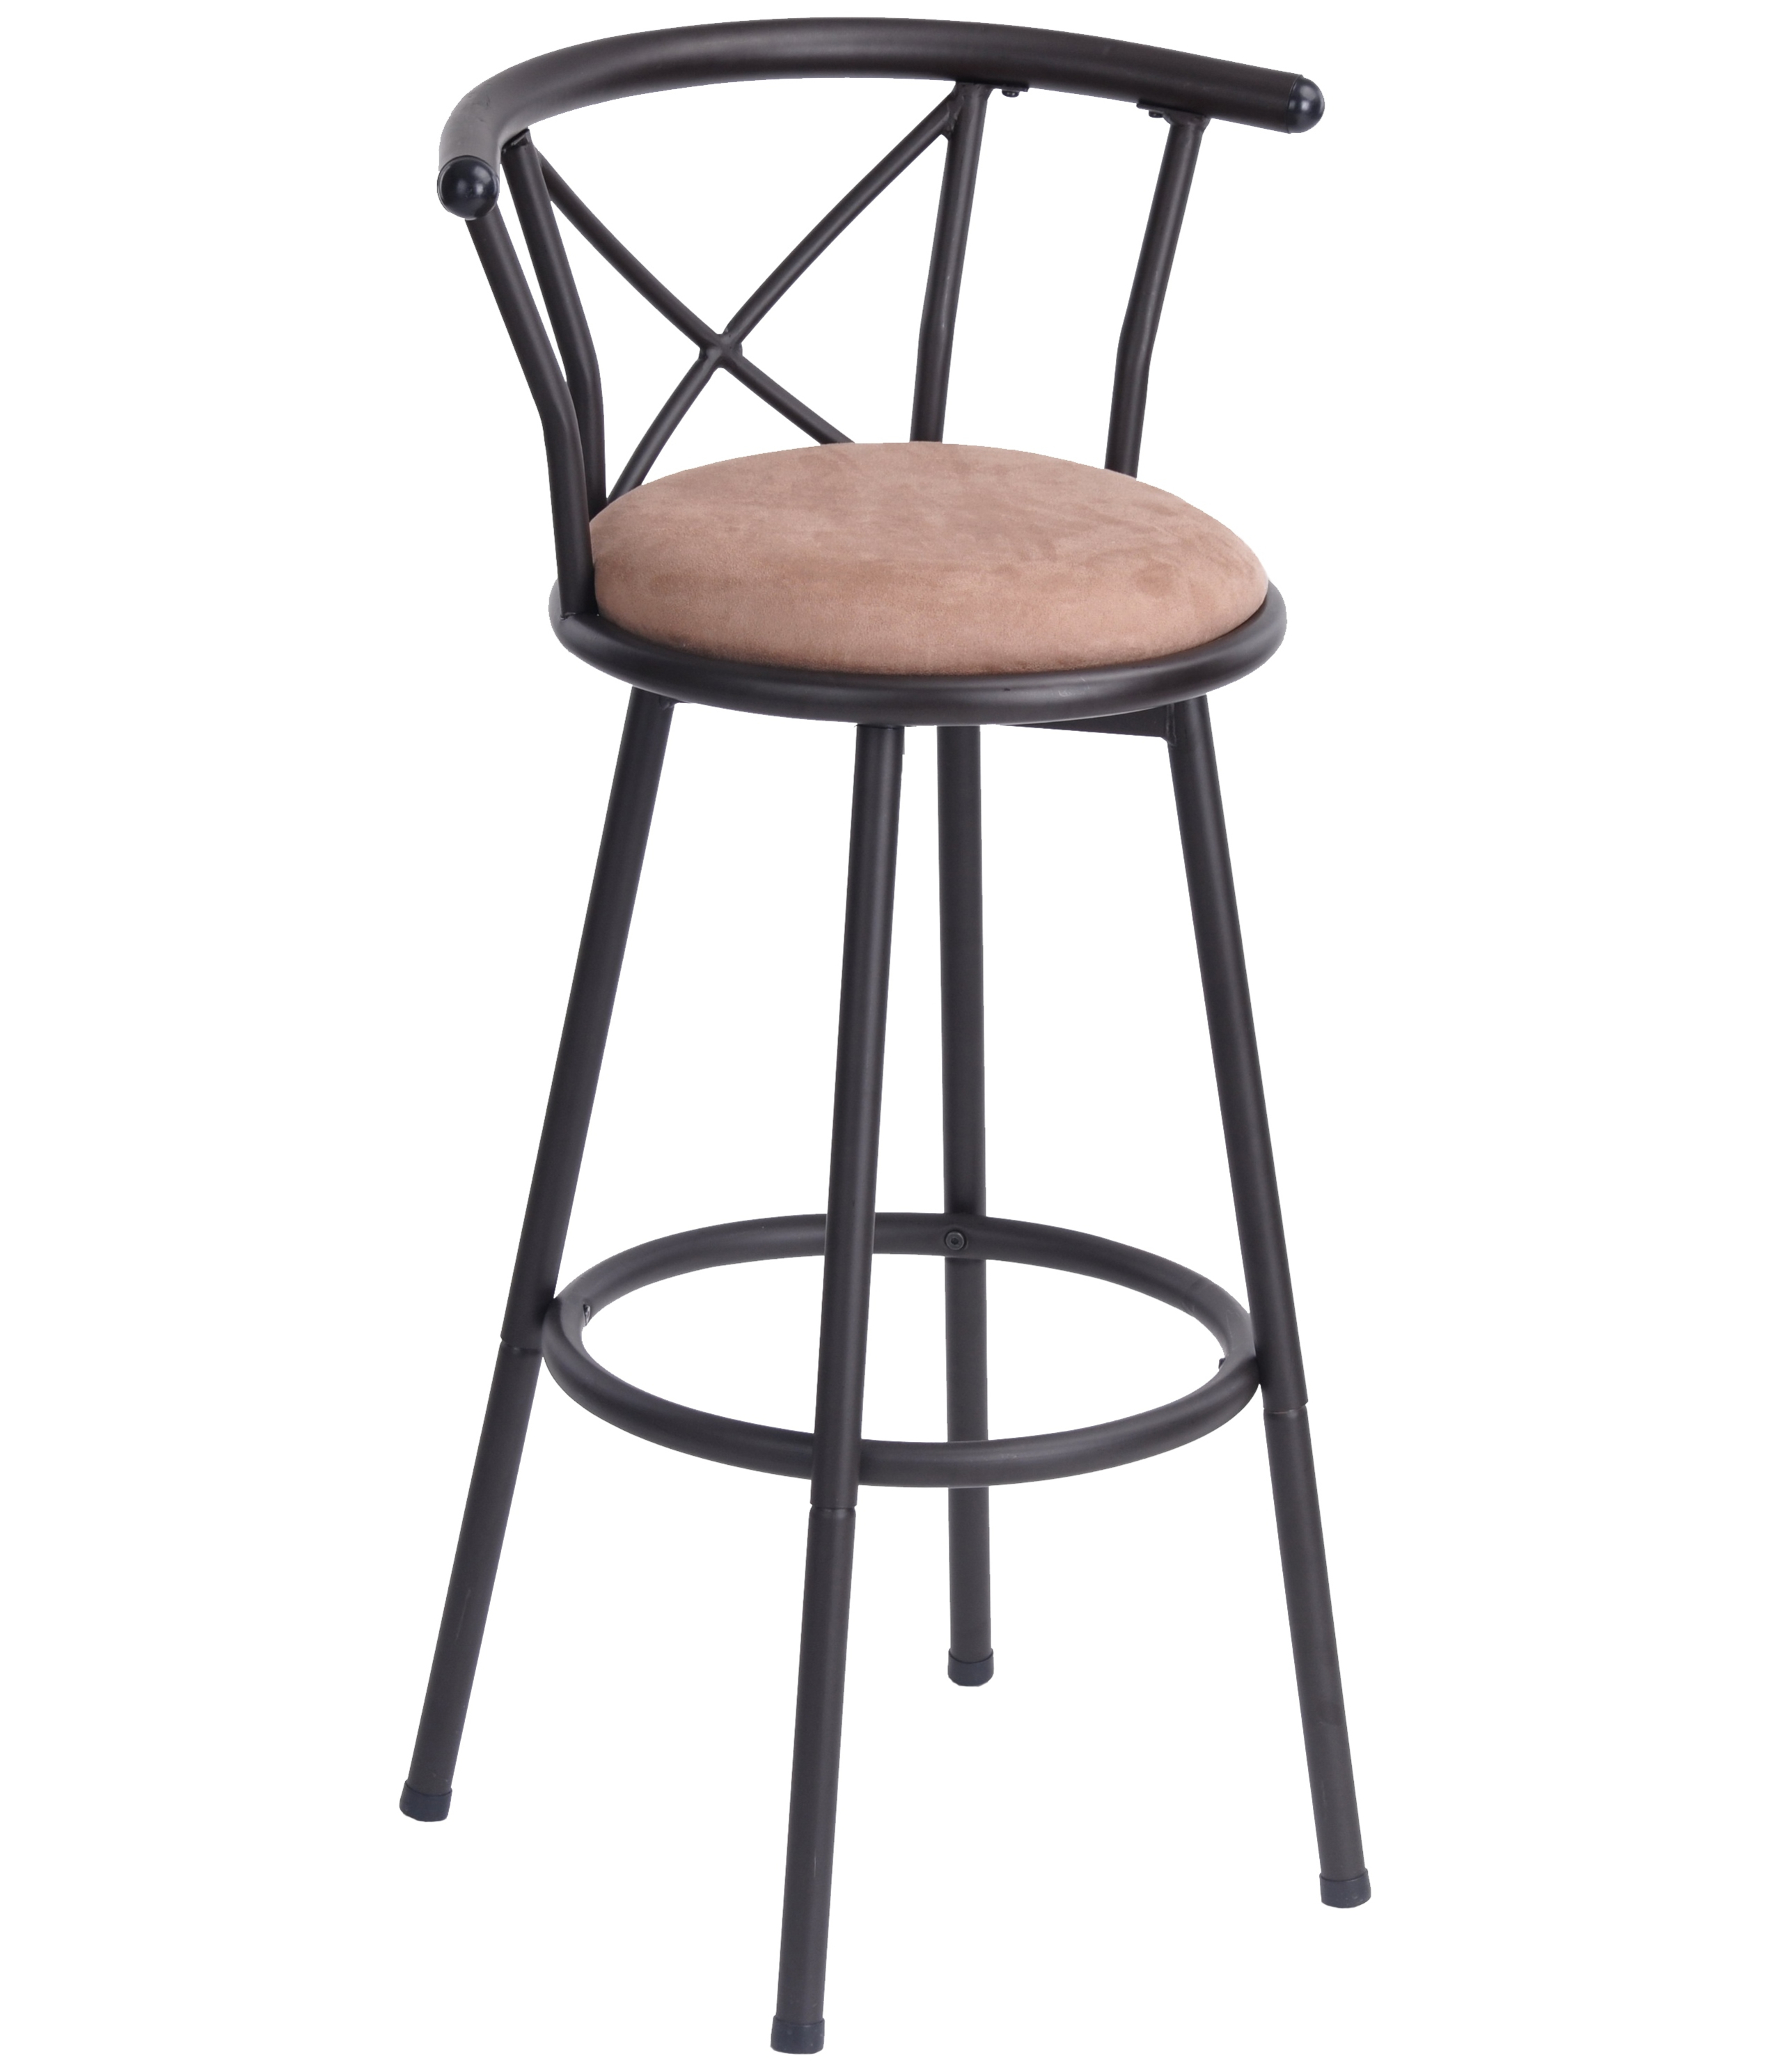 36 inch spectator stool